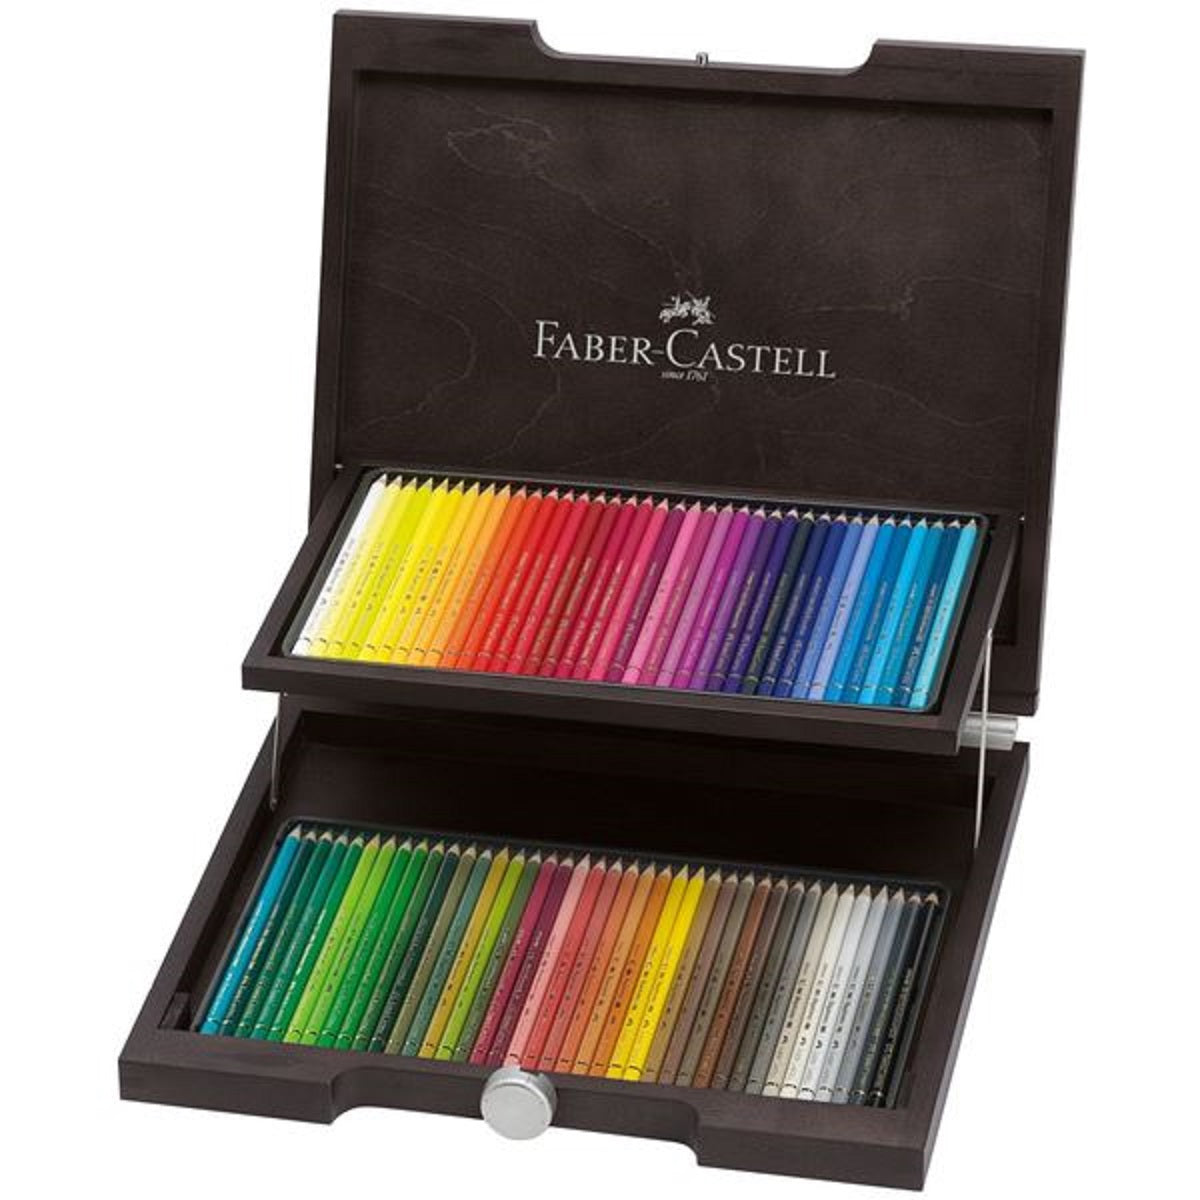 FABER-CASTELL 110072 Polychromos färgpenna, 72st i träetui